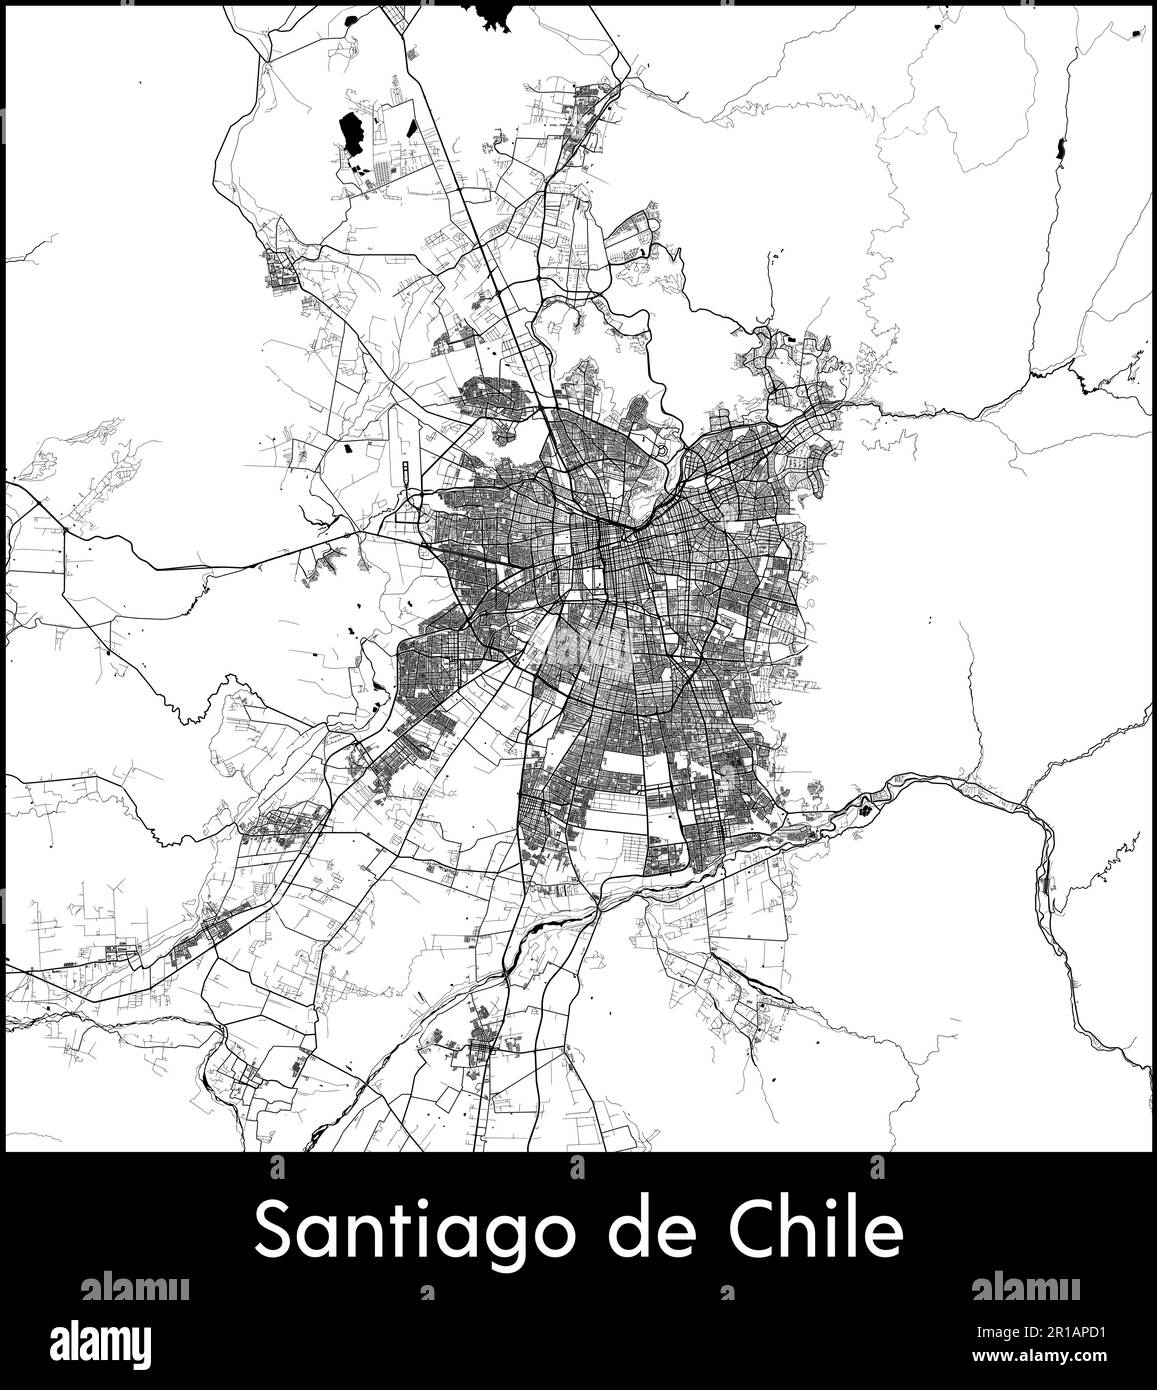 City Map South America Chile Santiago de Chile vector illustration Stock Vector